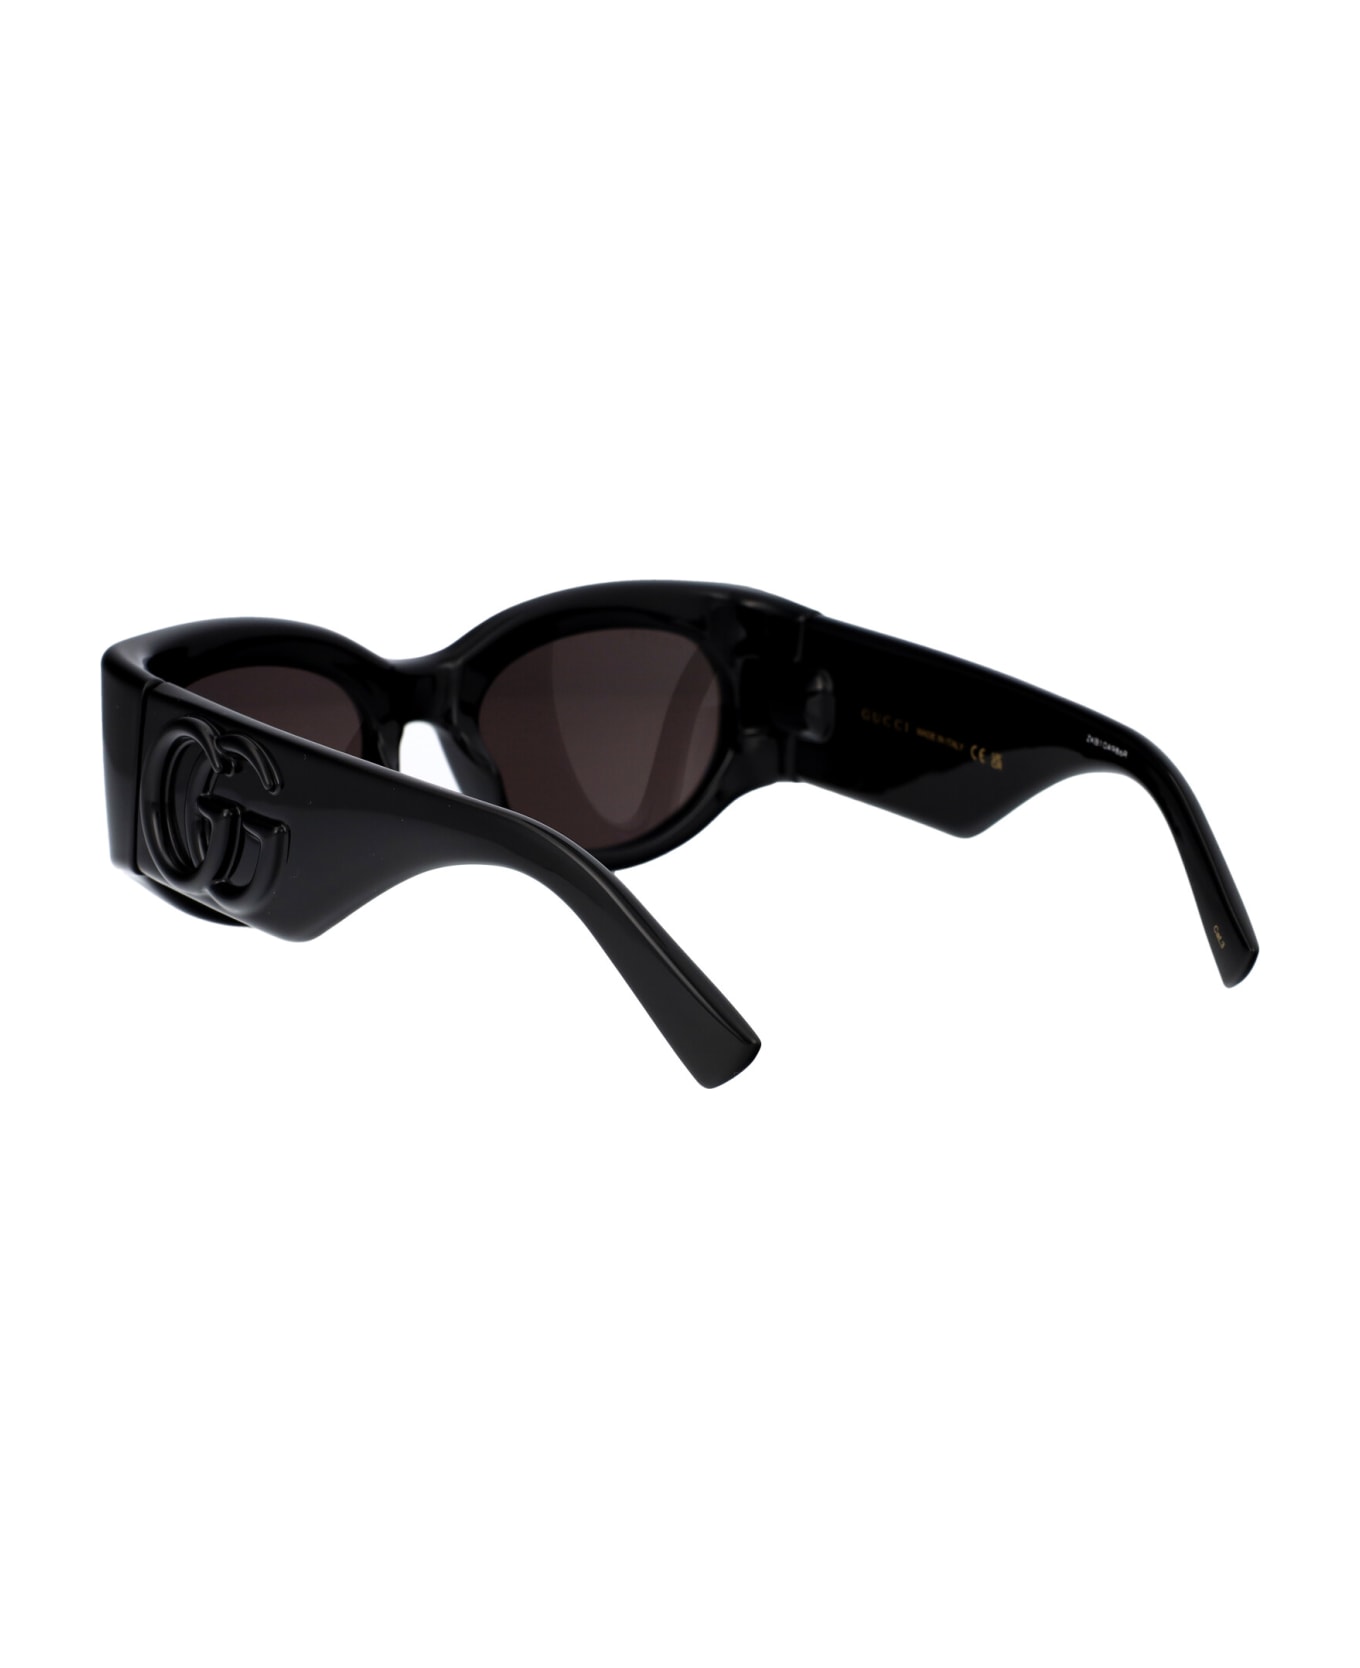 Gucci Eyewear Gg1544s Sunglasses - 001 BLACK BLACK GREY